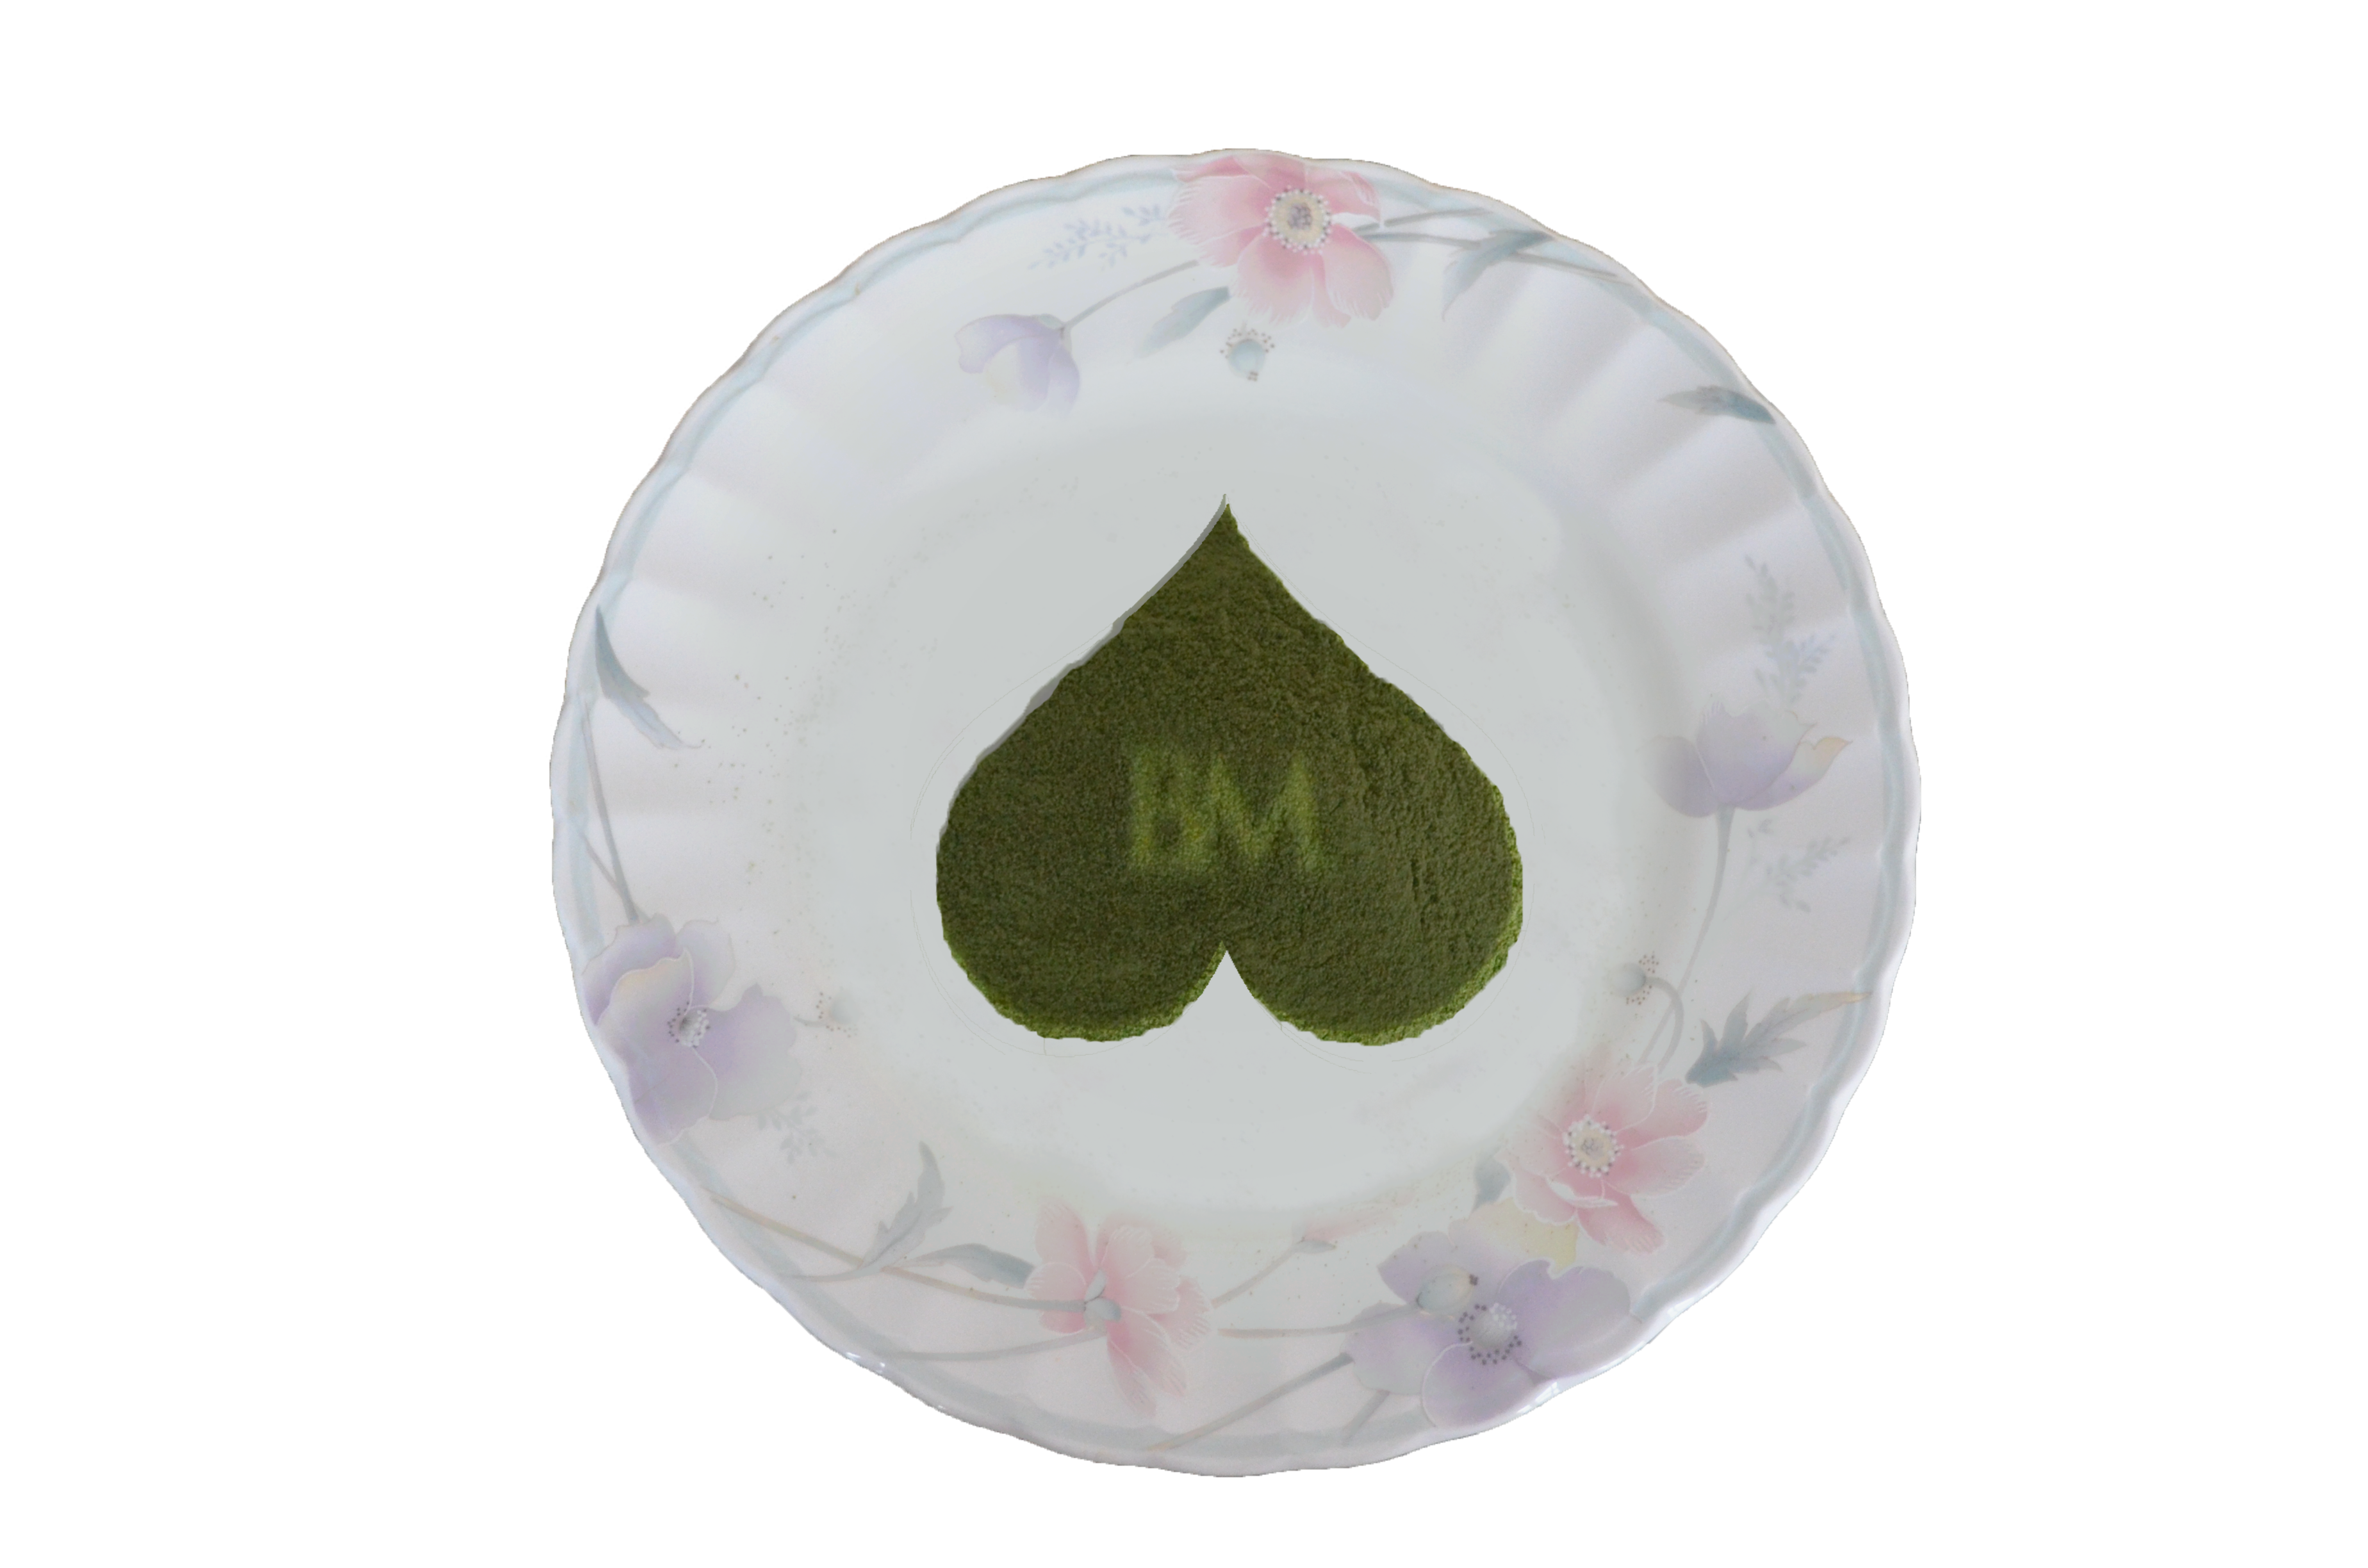 bm-matcha-heart-on-plate.png